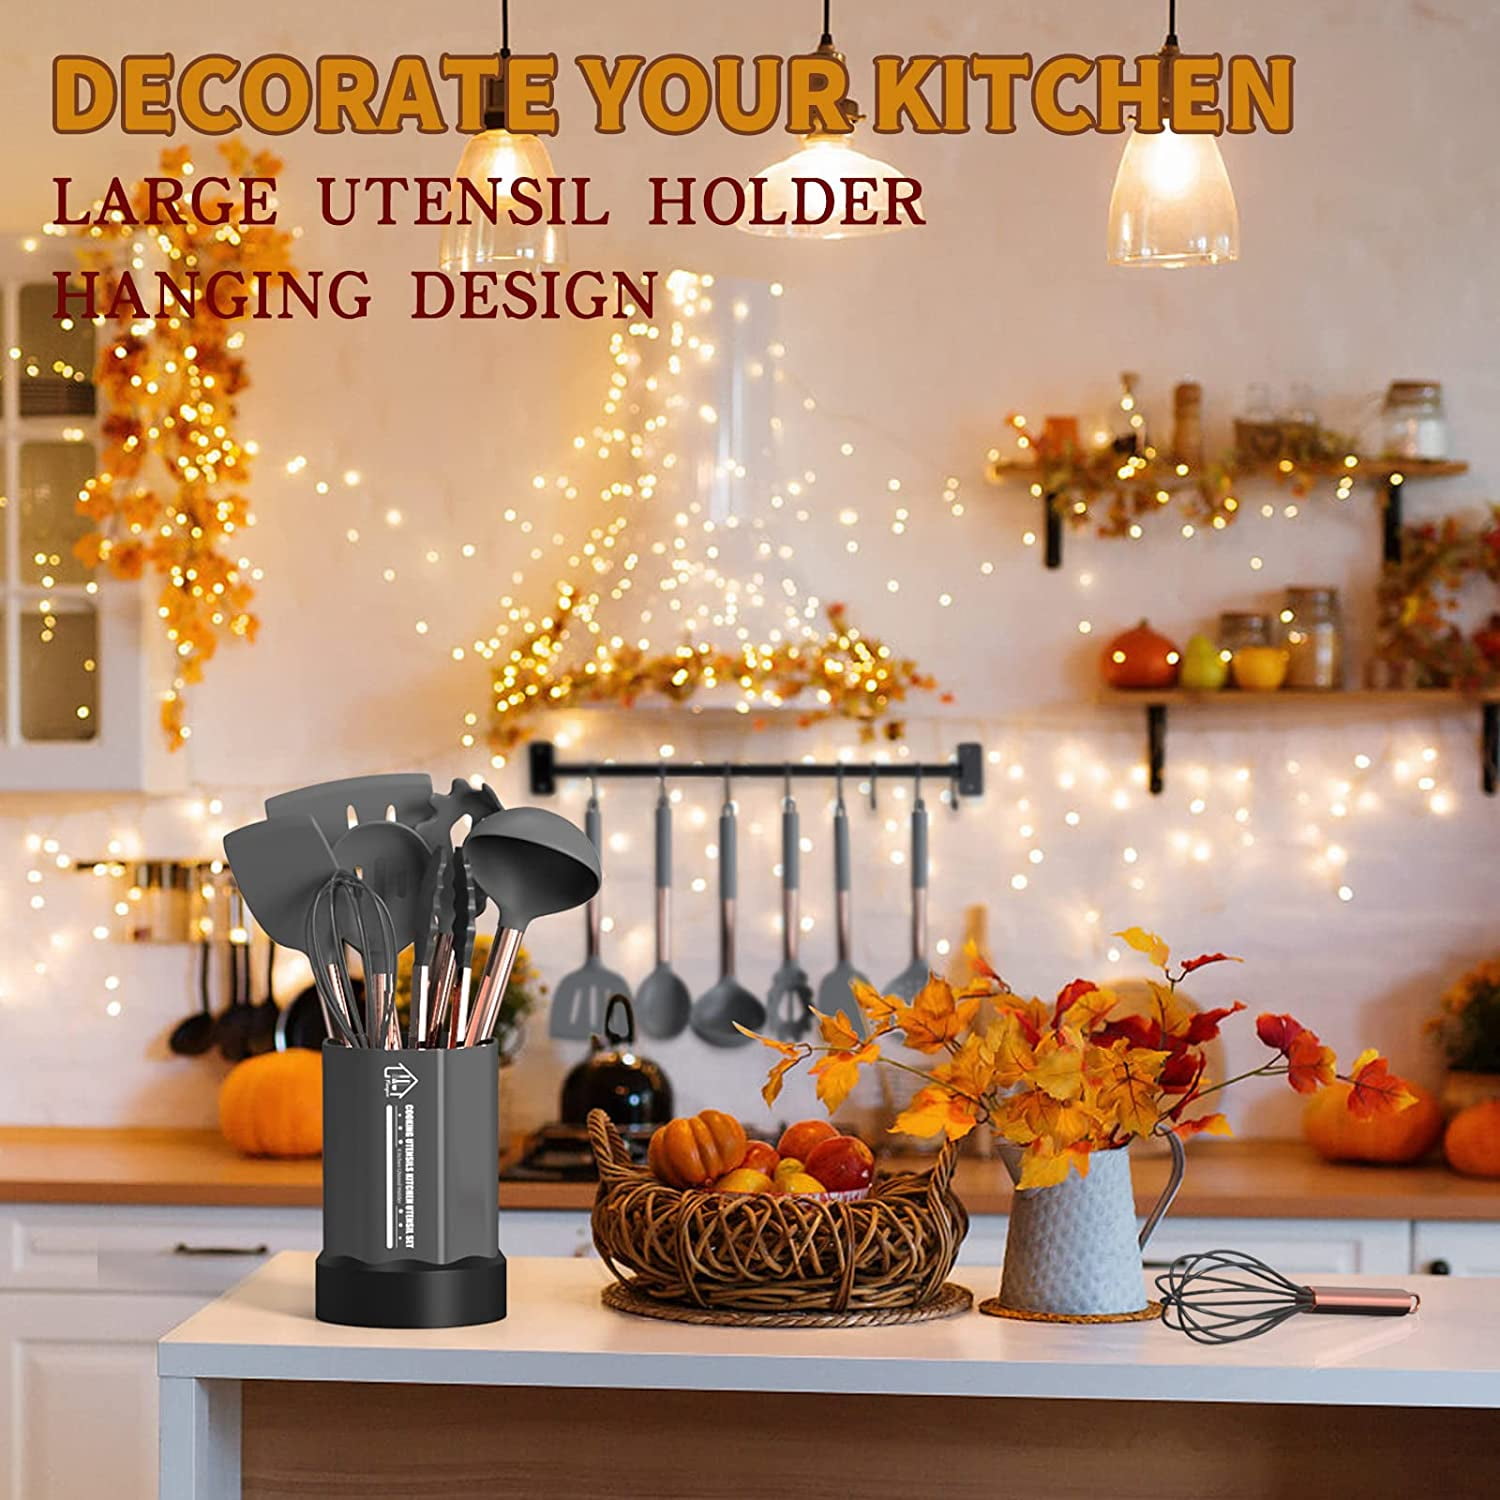 Fungun silicone cooking utensil set, fungun 24pcs silicone cooking kitchen utensils  set, non-stick heat resistant - best kitchen spa